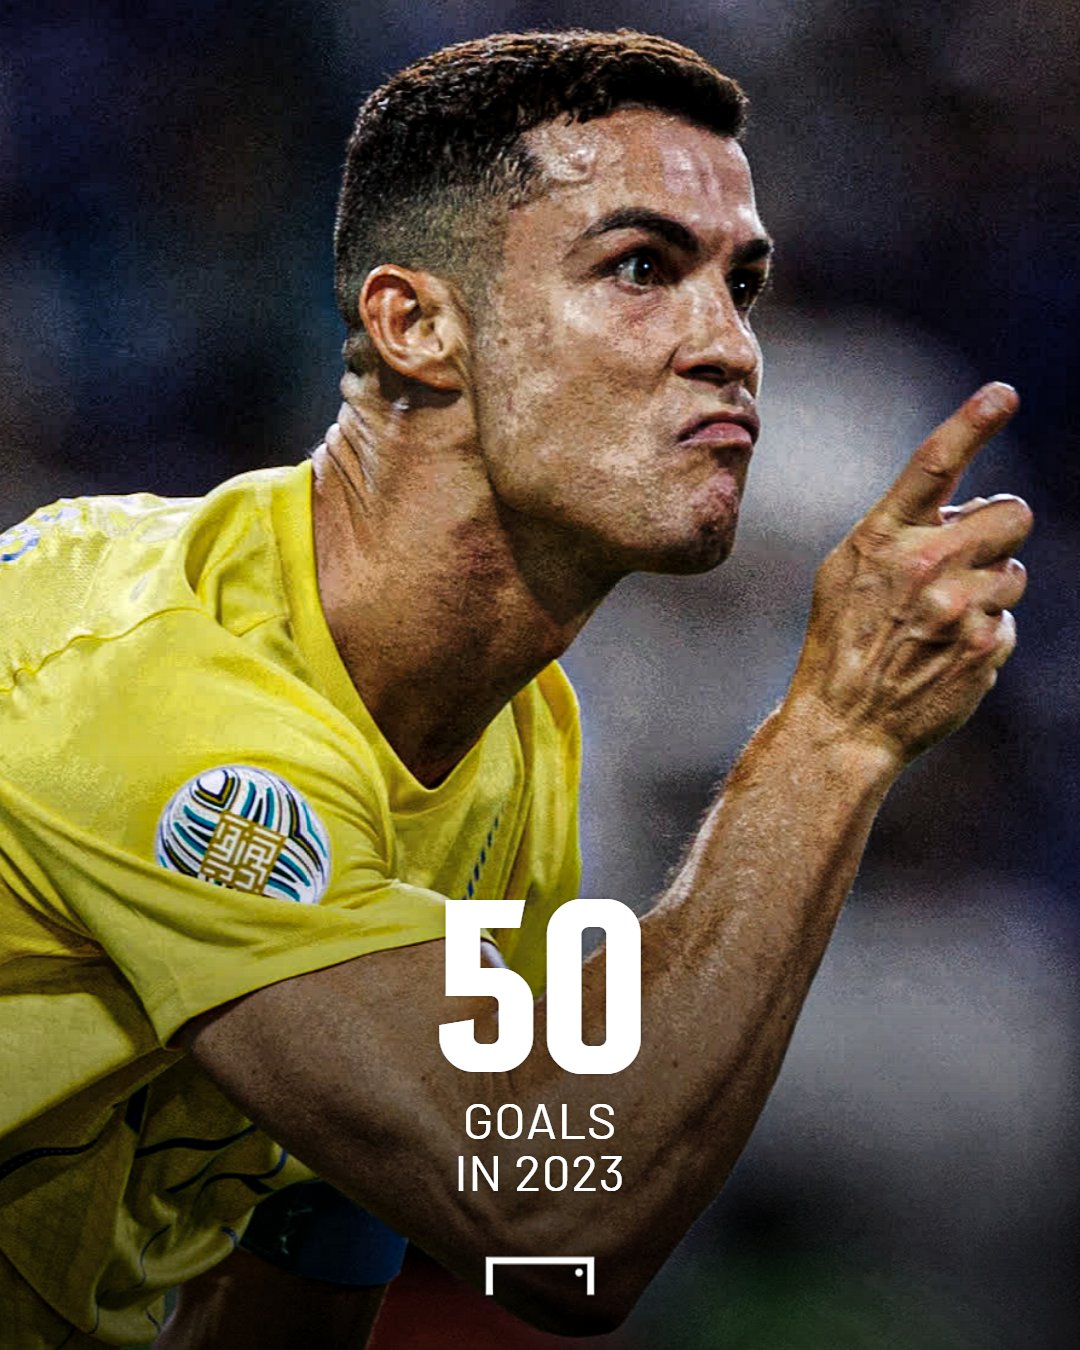 GOAL on X: "Cristiano Ronaldo scores his 50th goal in 2023   https://t.co/VrlsidYoWl" / X